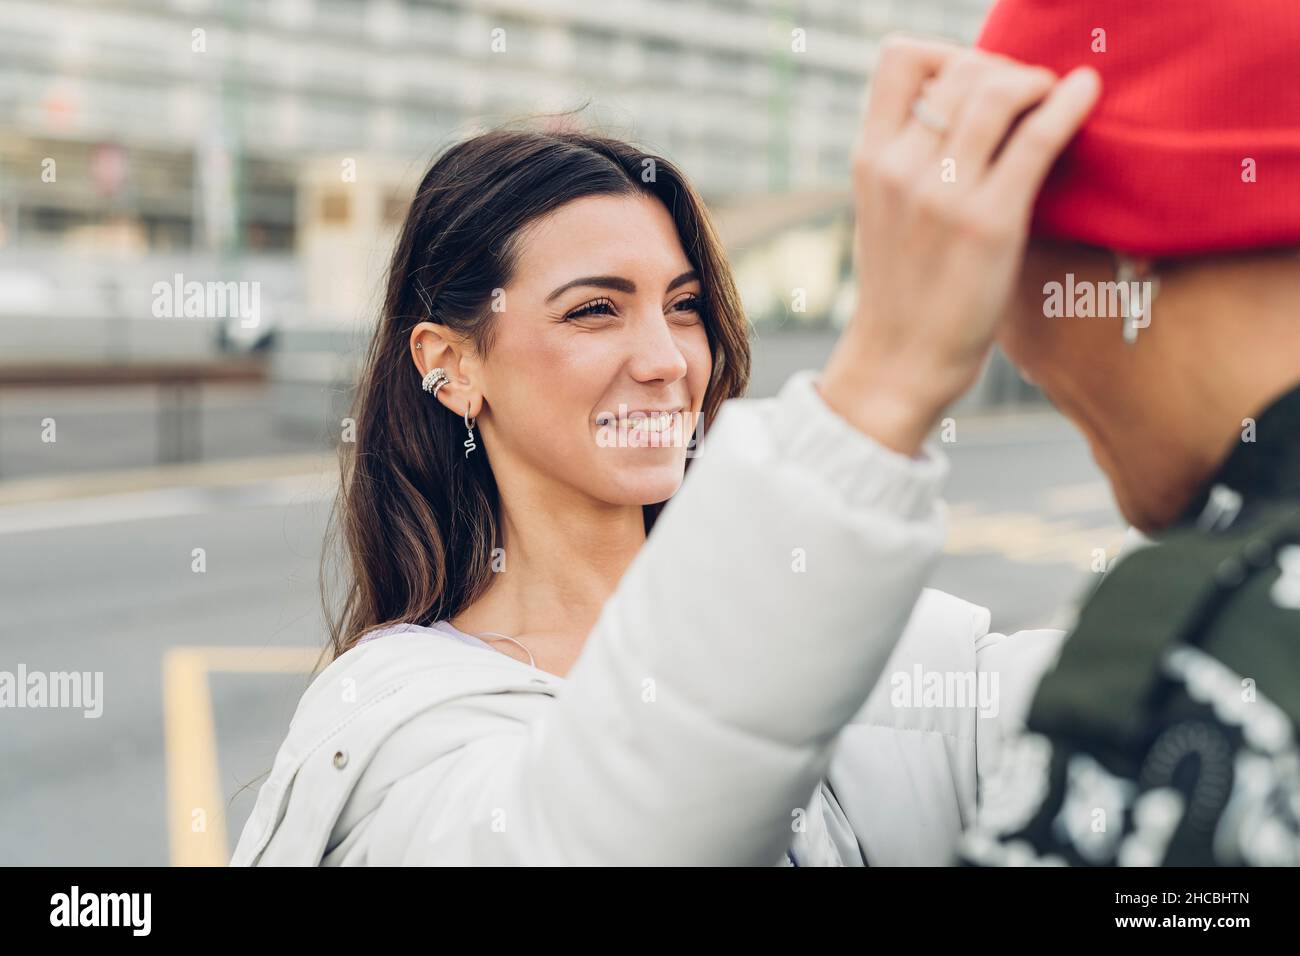 Smiling woman adjusting boyfriend's knit hat Stock Photo